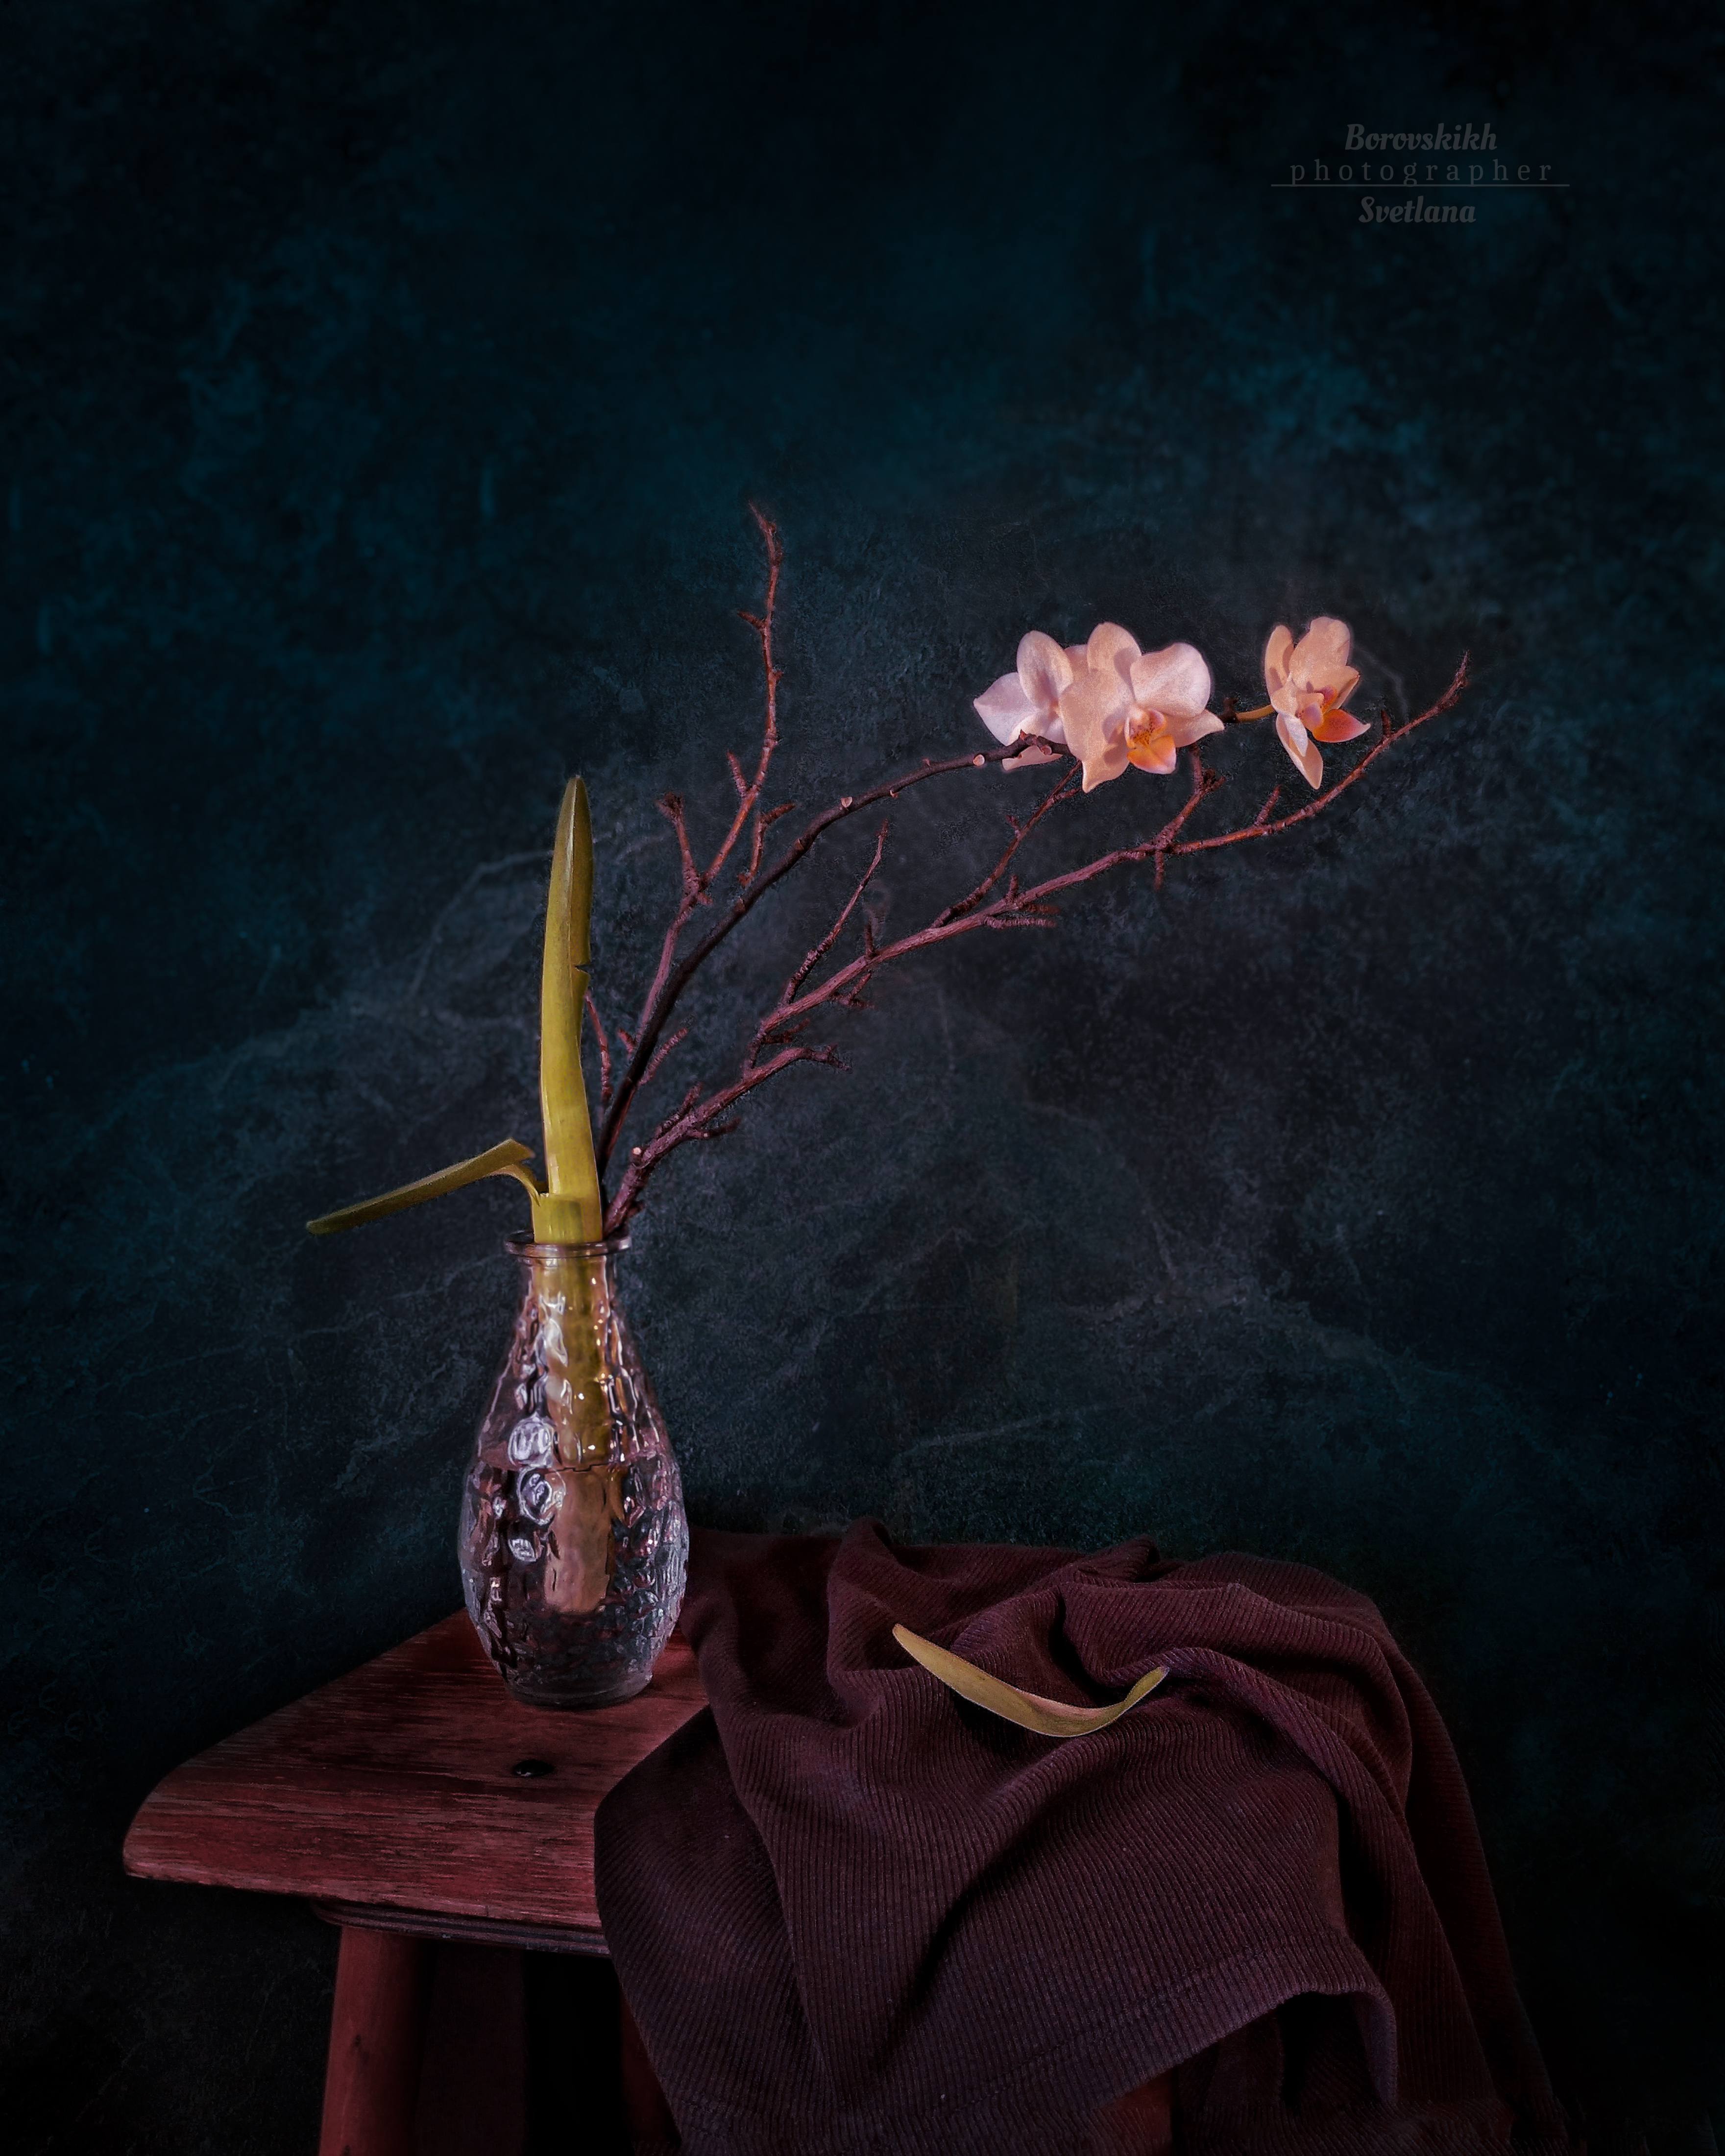 натюрморт, низкий ключ, darkphoto, минимализм, драпировка, ваза, цветы, орхидея, фото на телефон, Светлана Боровских